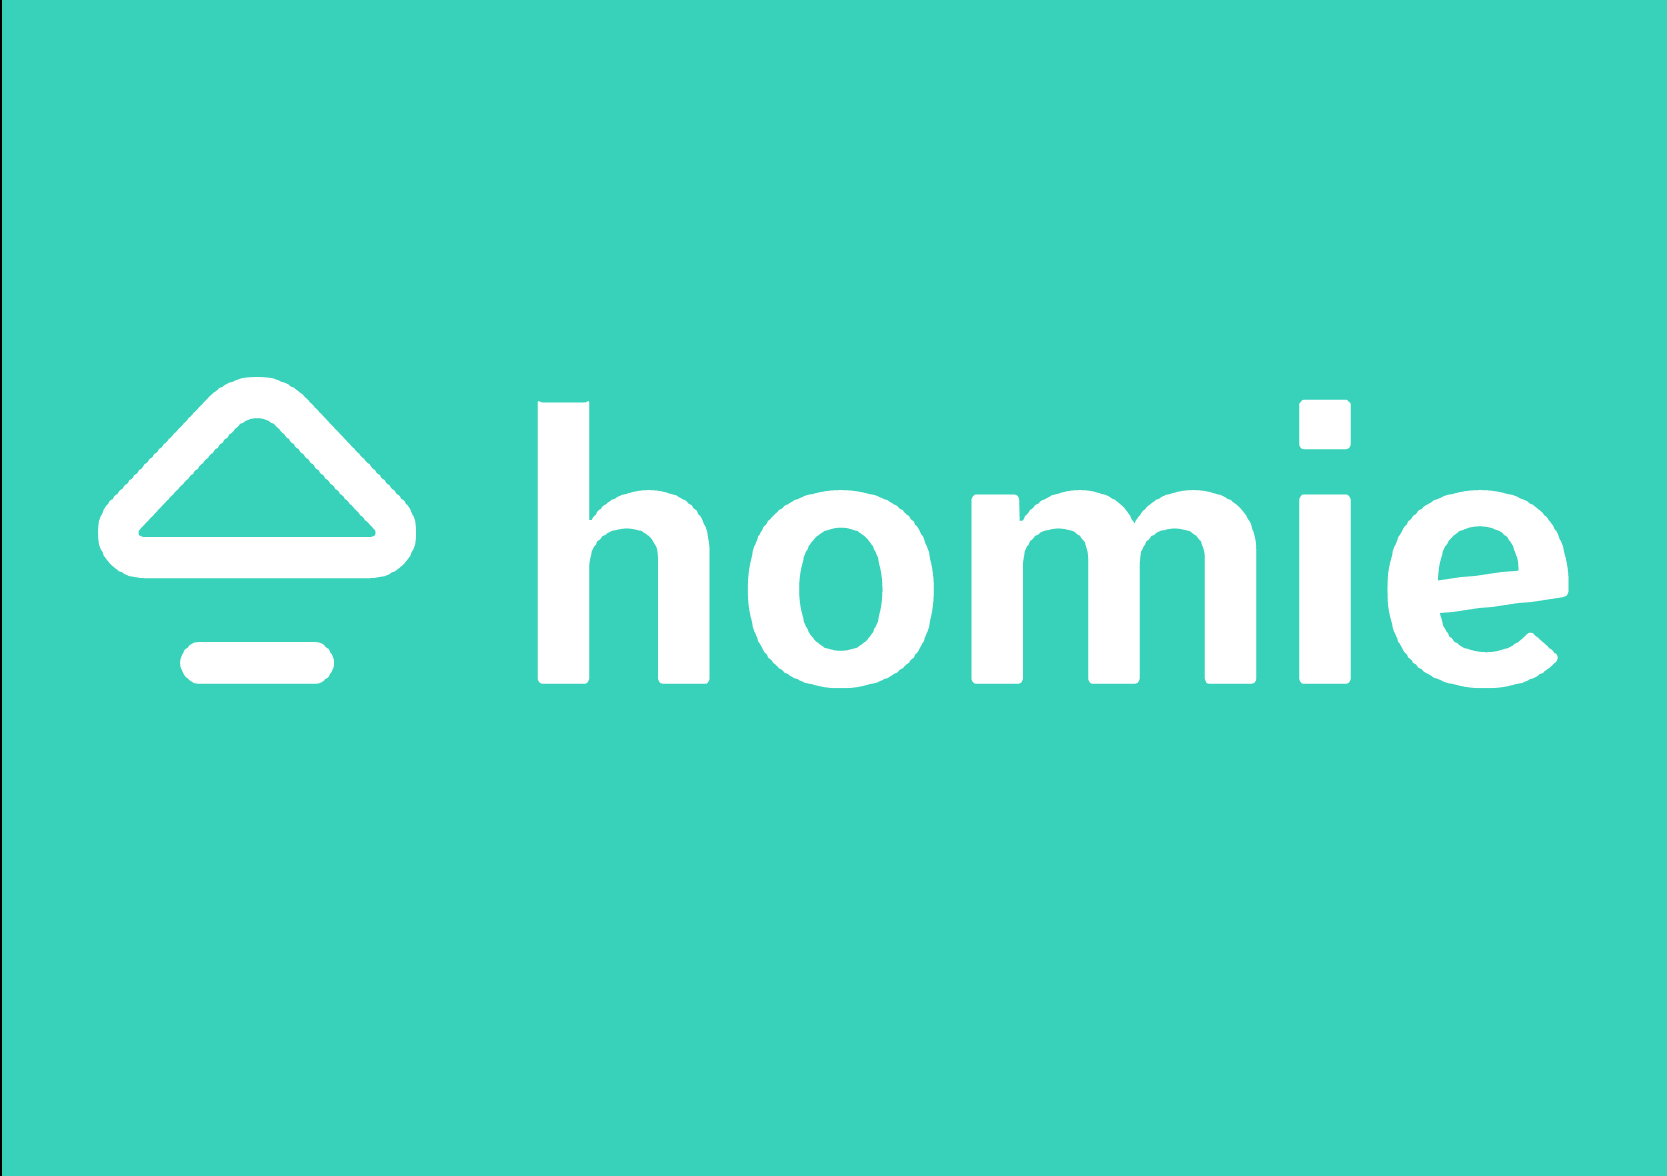 Homie Logo